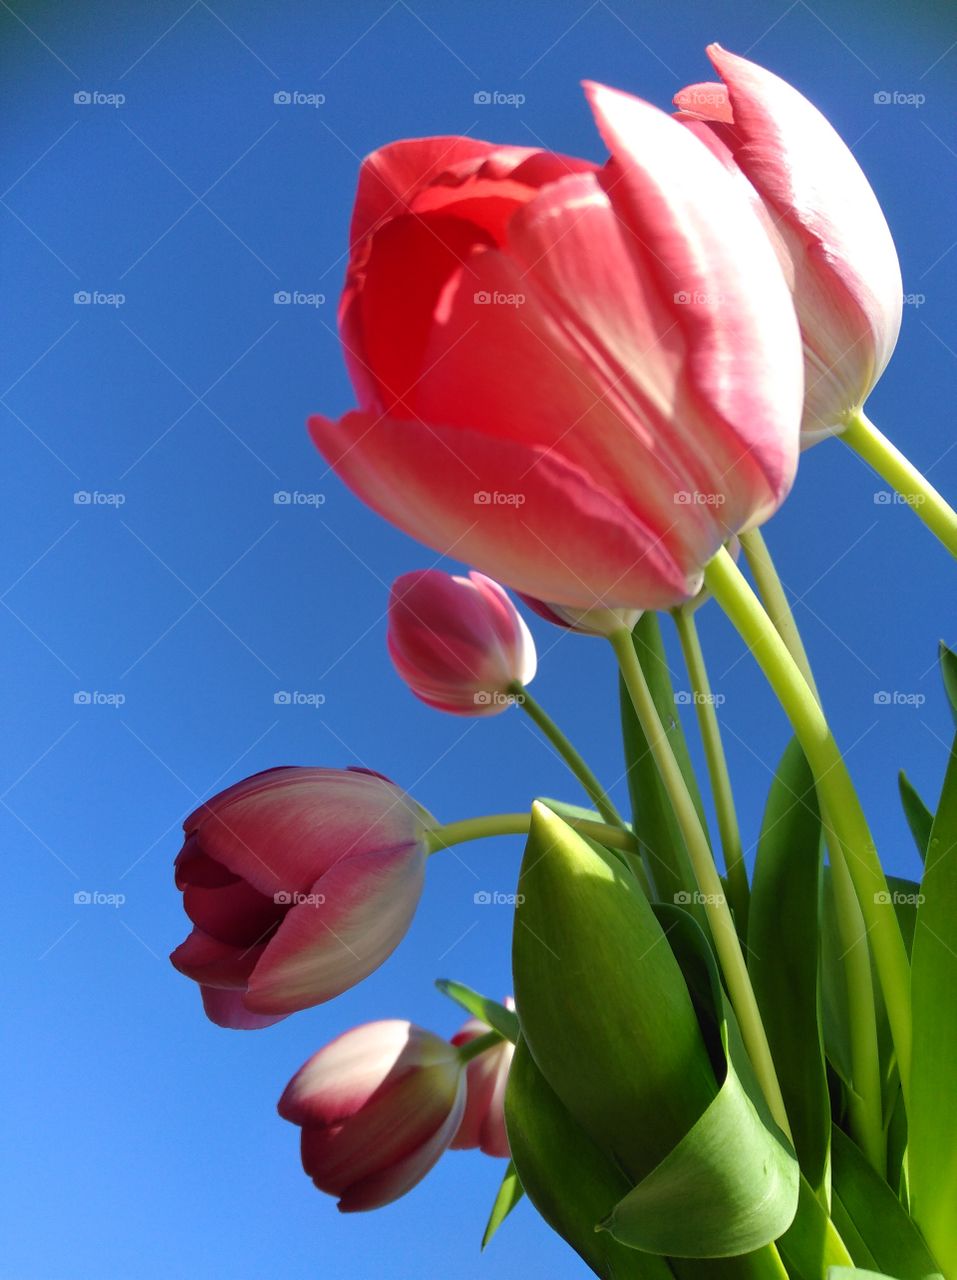 red tulip
rote Tulpen